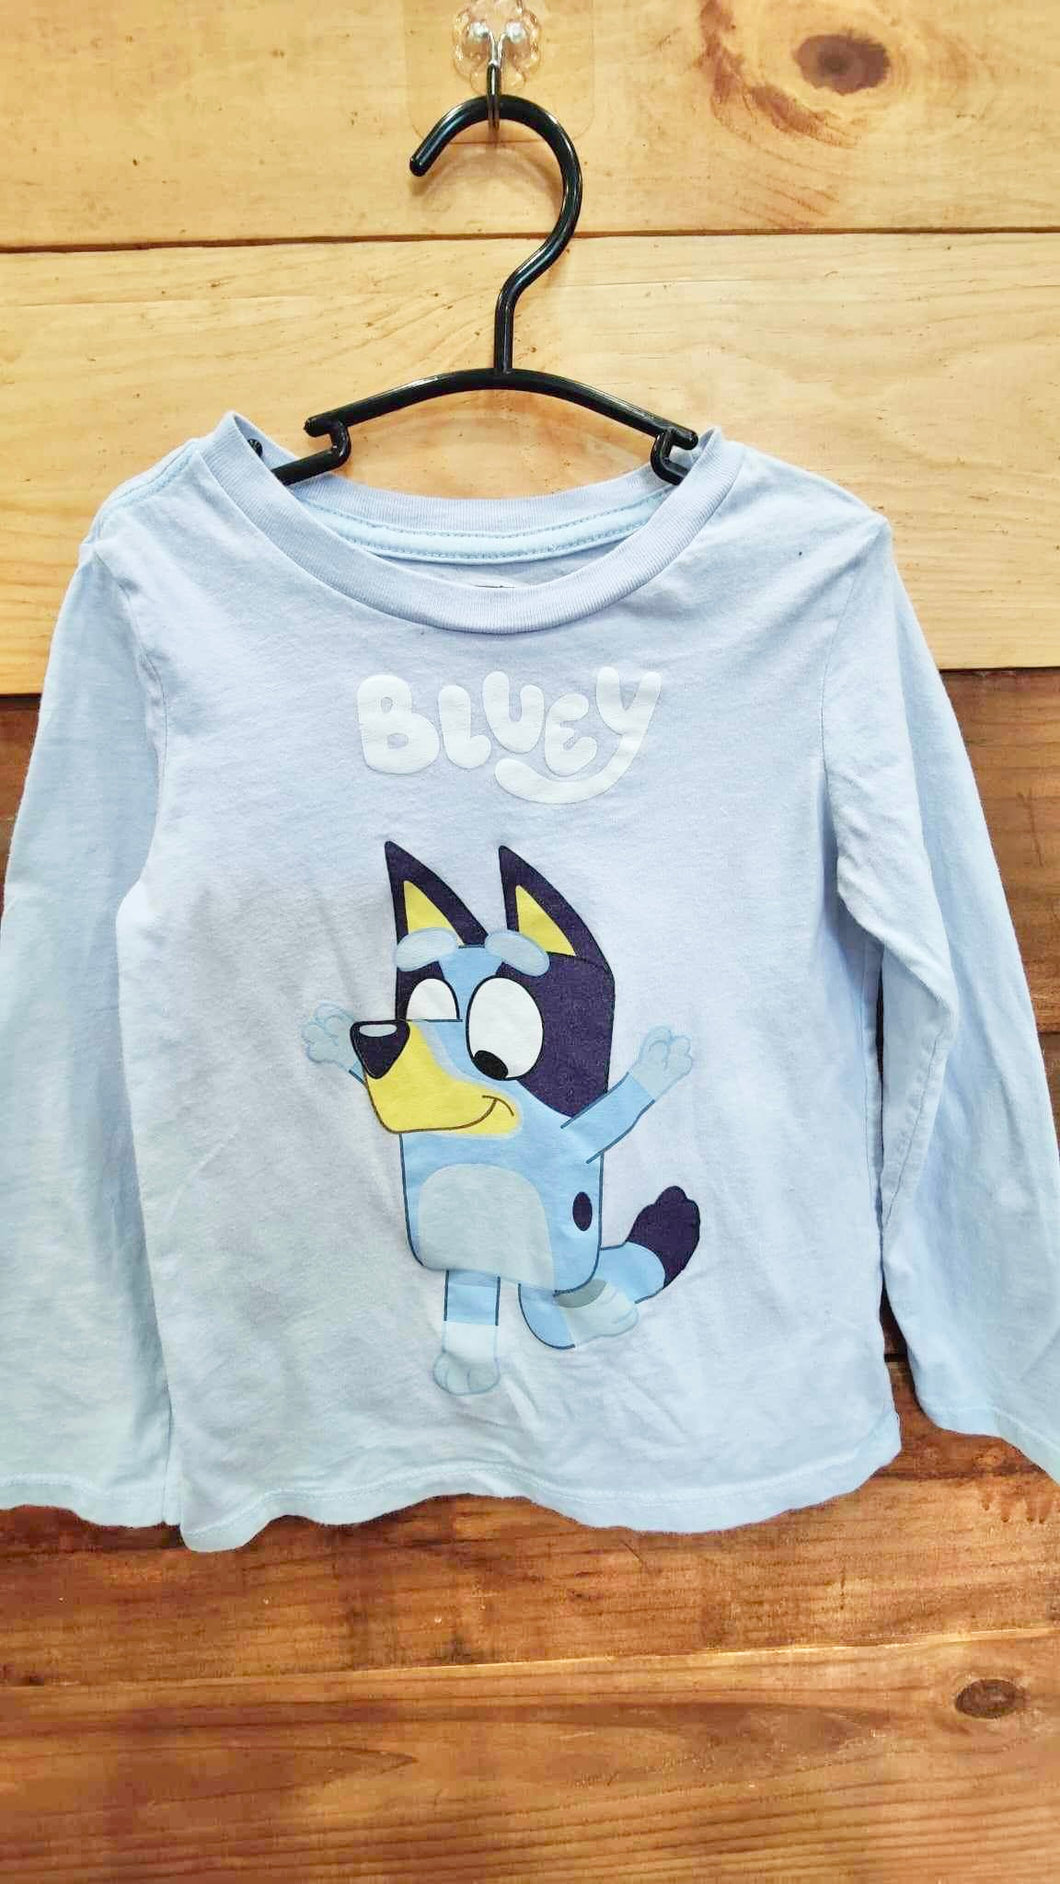 Bluey Shirt Size 4T